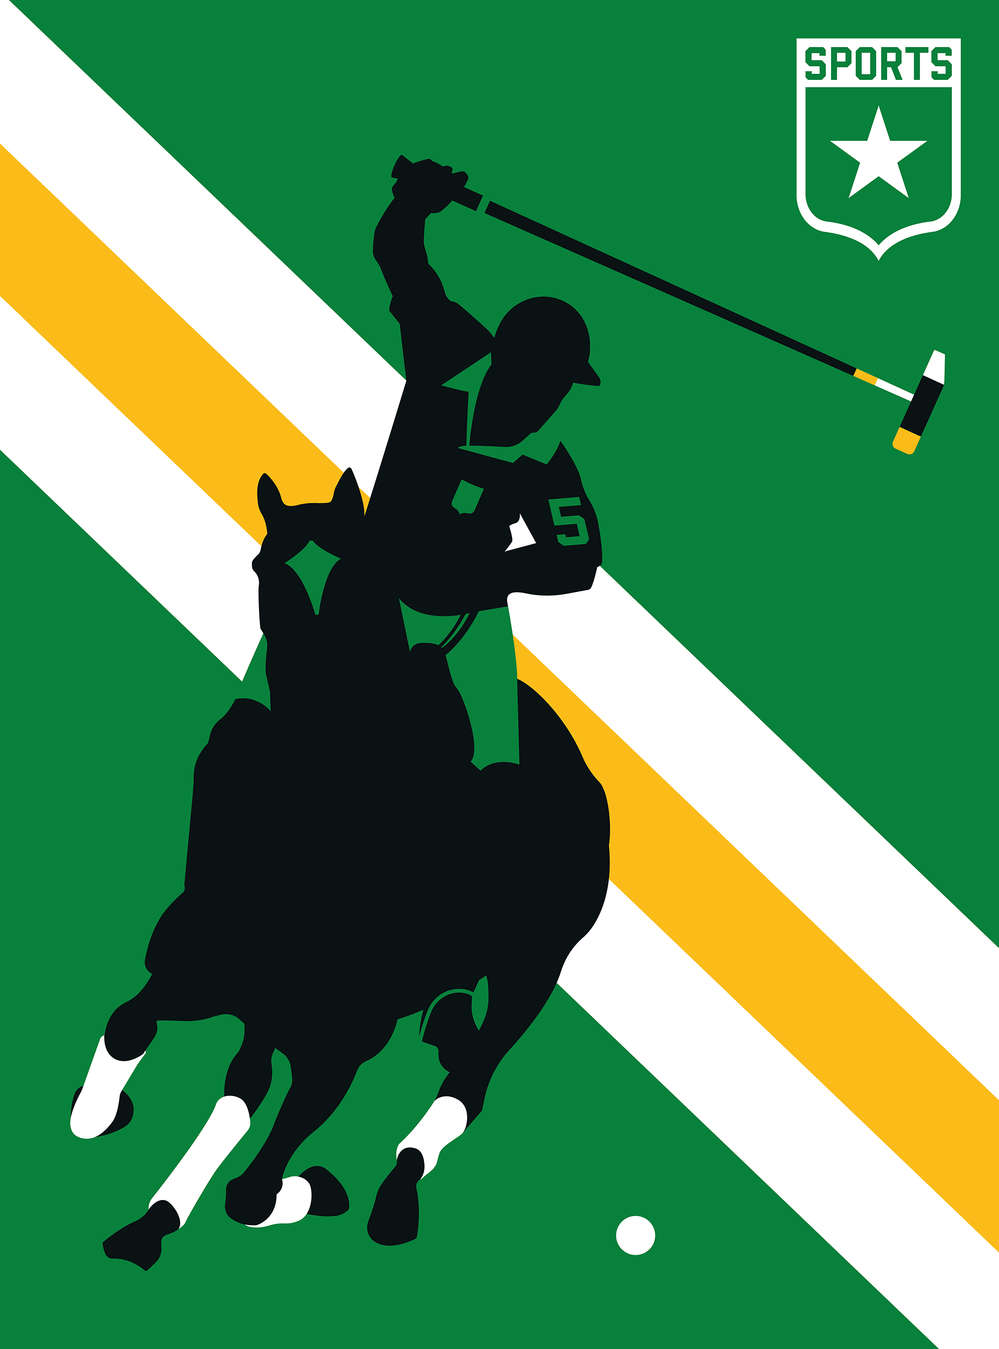             Photo wallpaper sport horses polo motif player icon
        